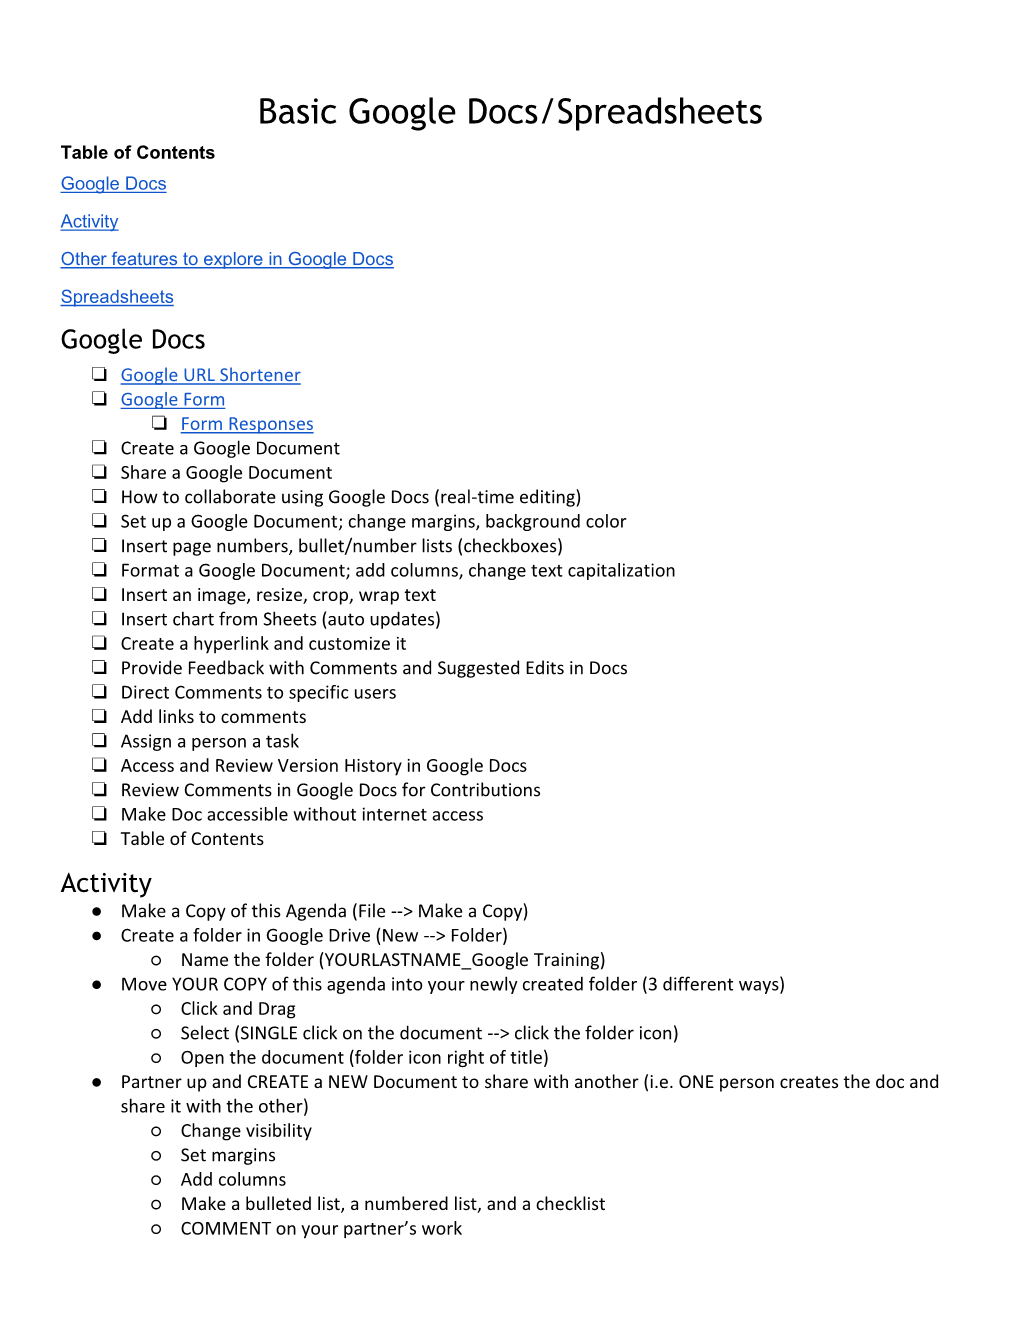 Google Sheets/Docs Tips